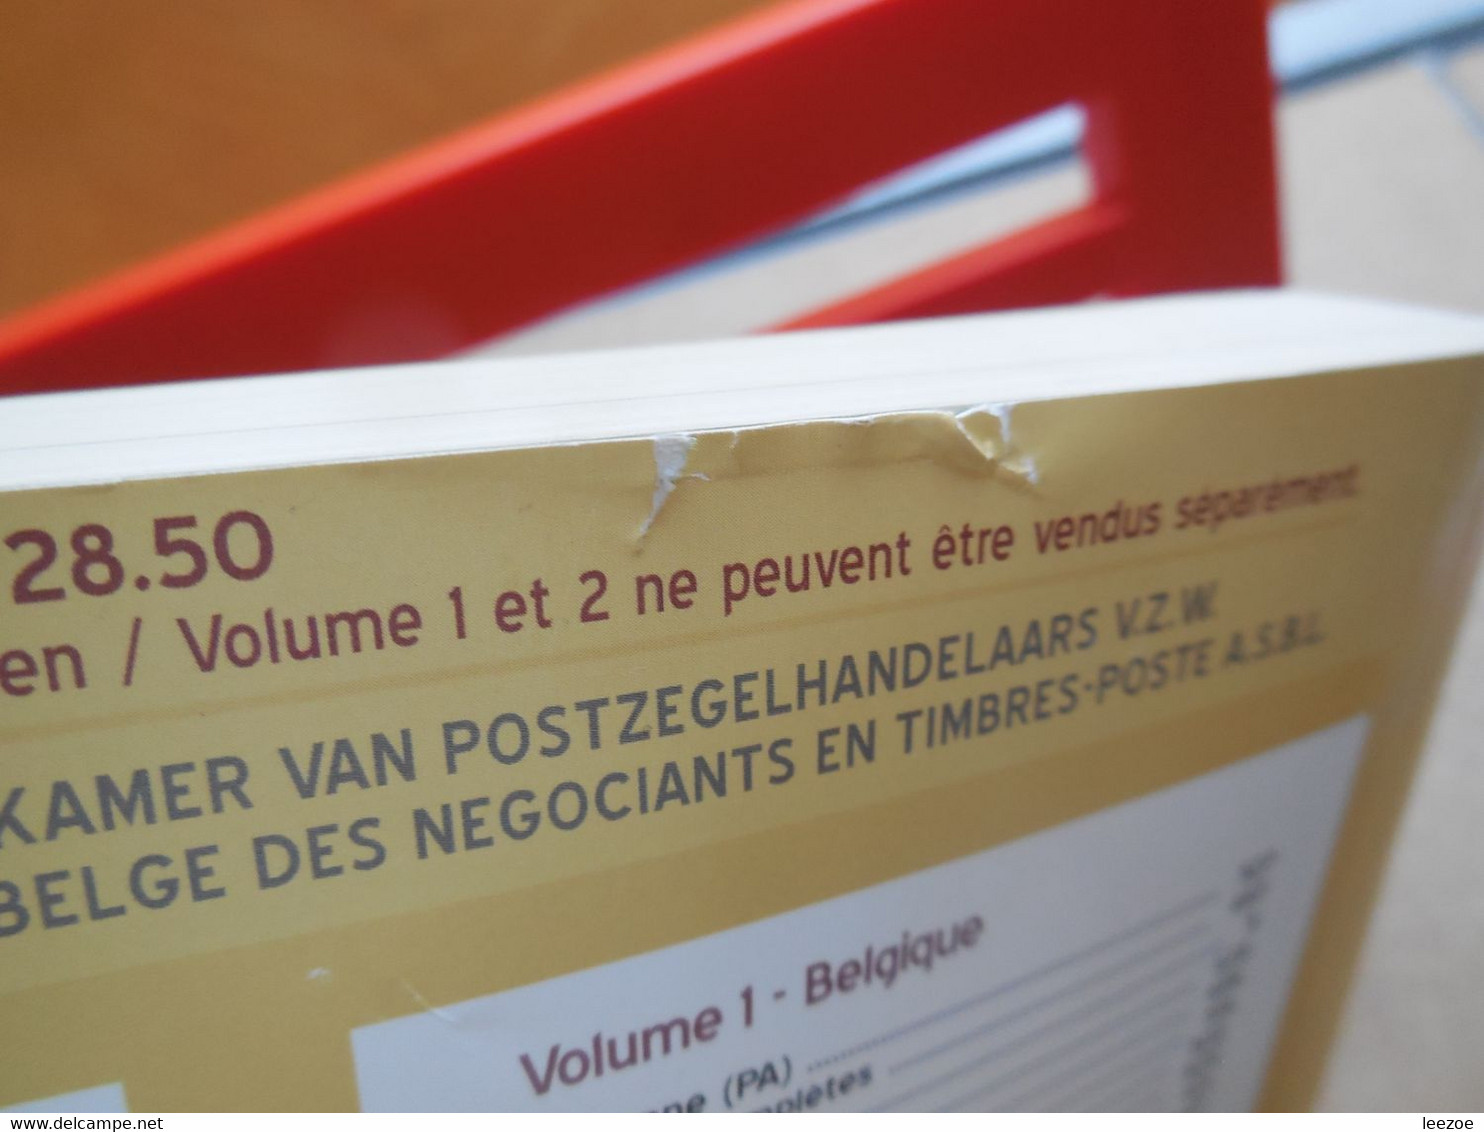 Officiële Postzegelcatalogus, Catalogue Officiel De Timbres Postes Belge De 2013. - Bélgica